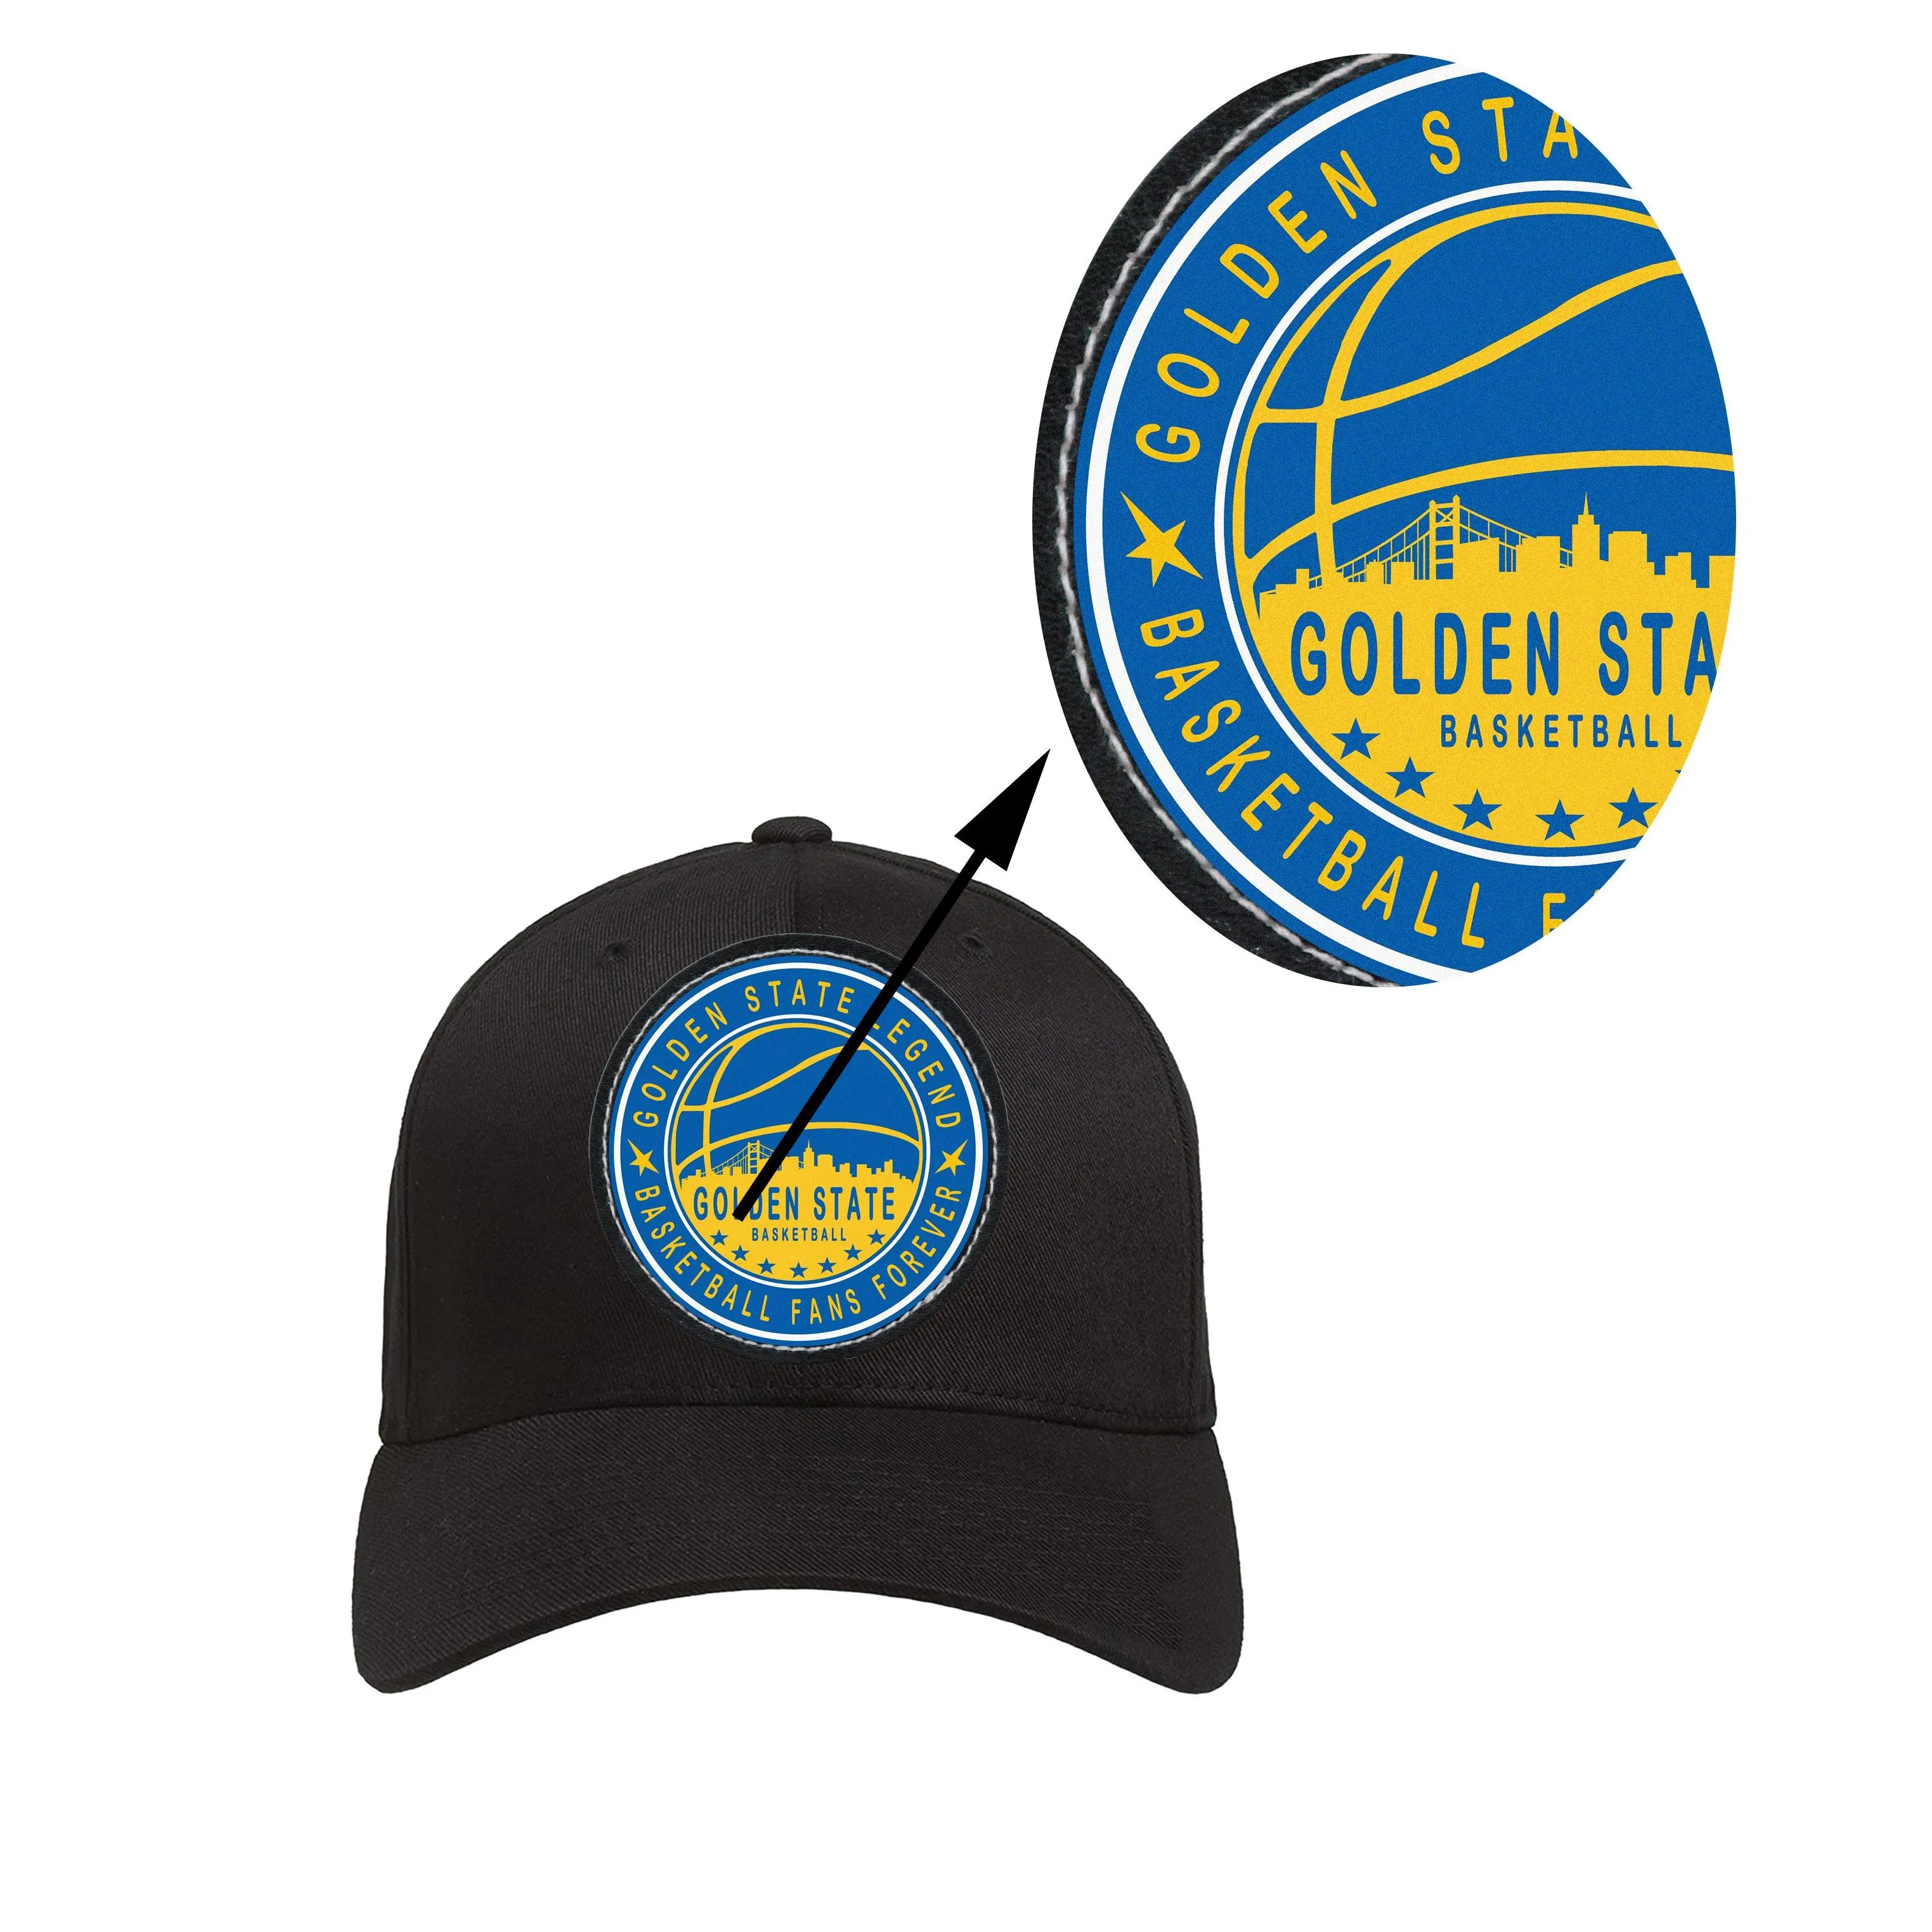 Golden State Baseball Cap Unisex Adjustable Snapback Lightweight Versatile Classic Basketball Club Fans Hat